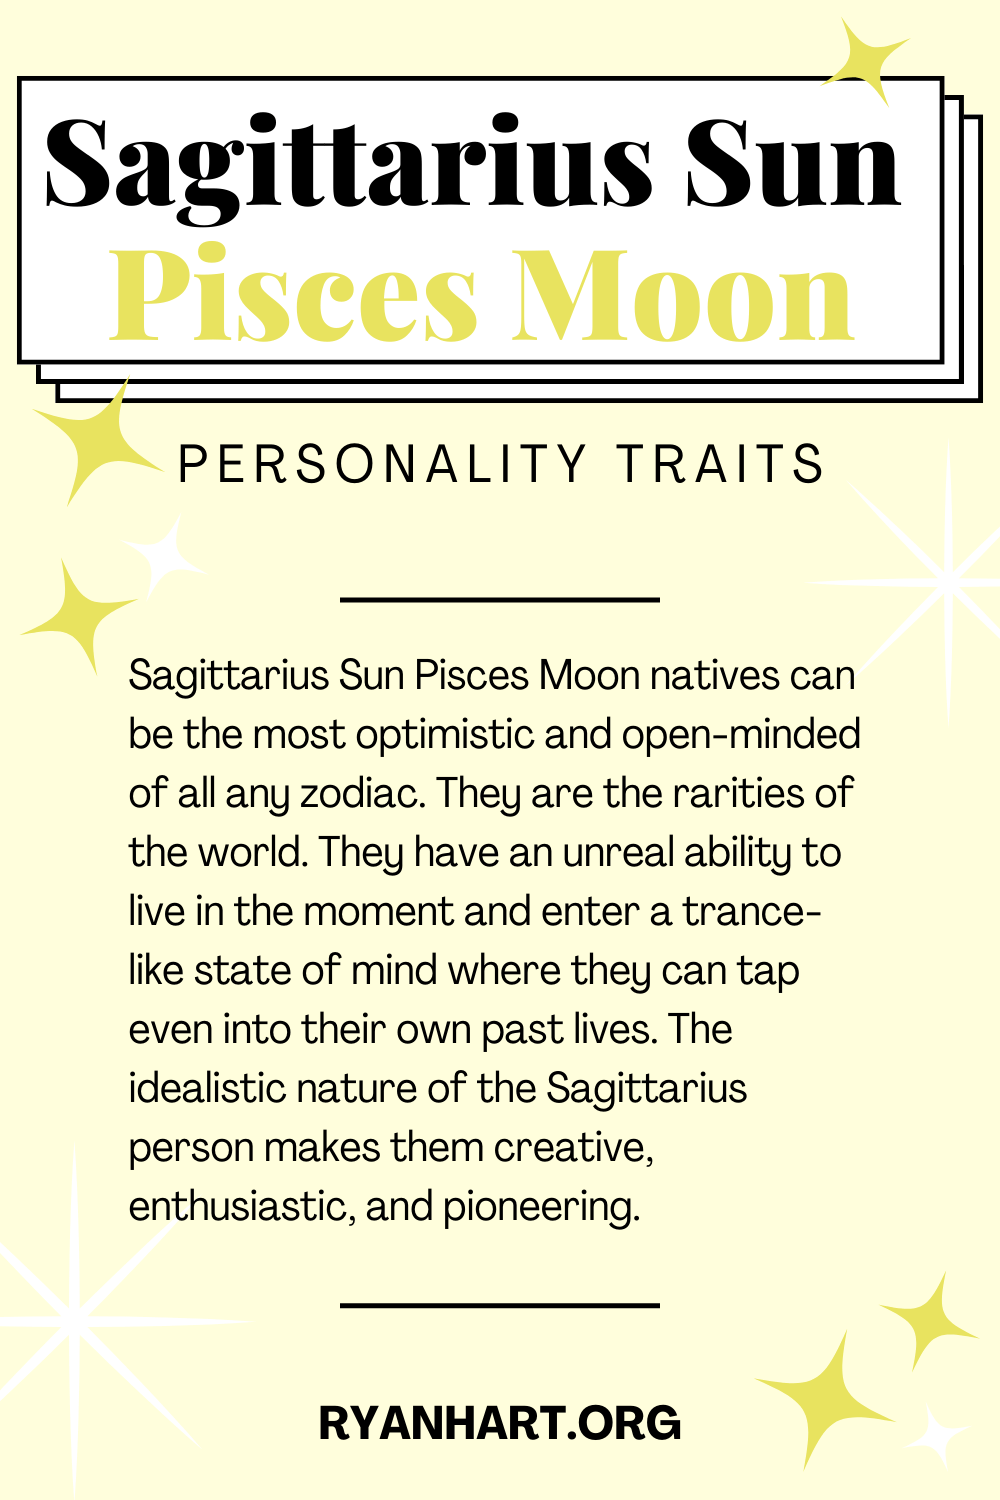 Sagittarius Sun Pisces Moon Description